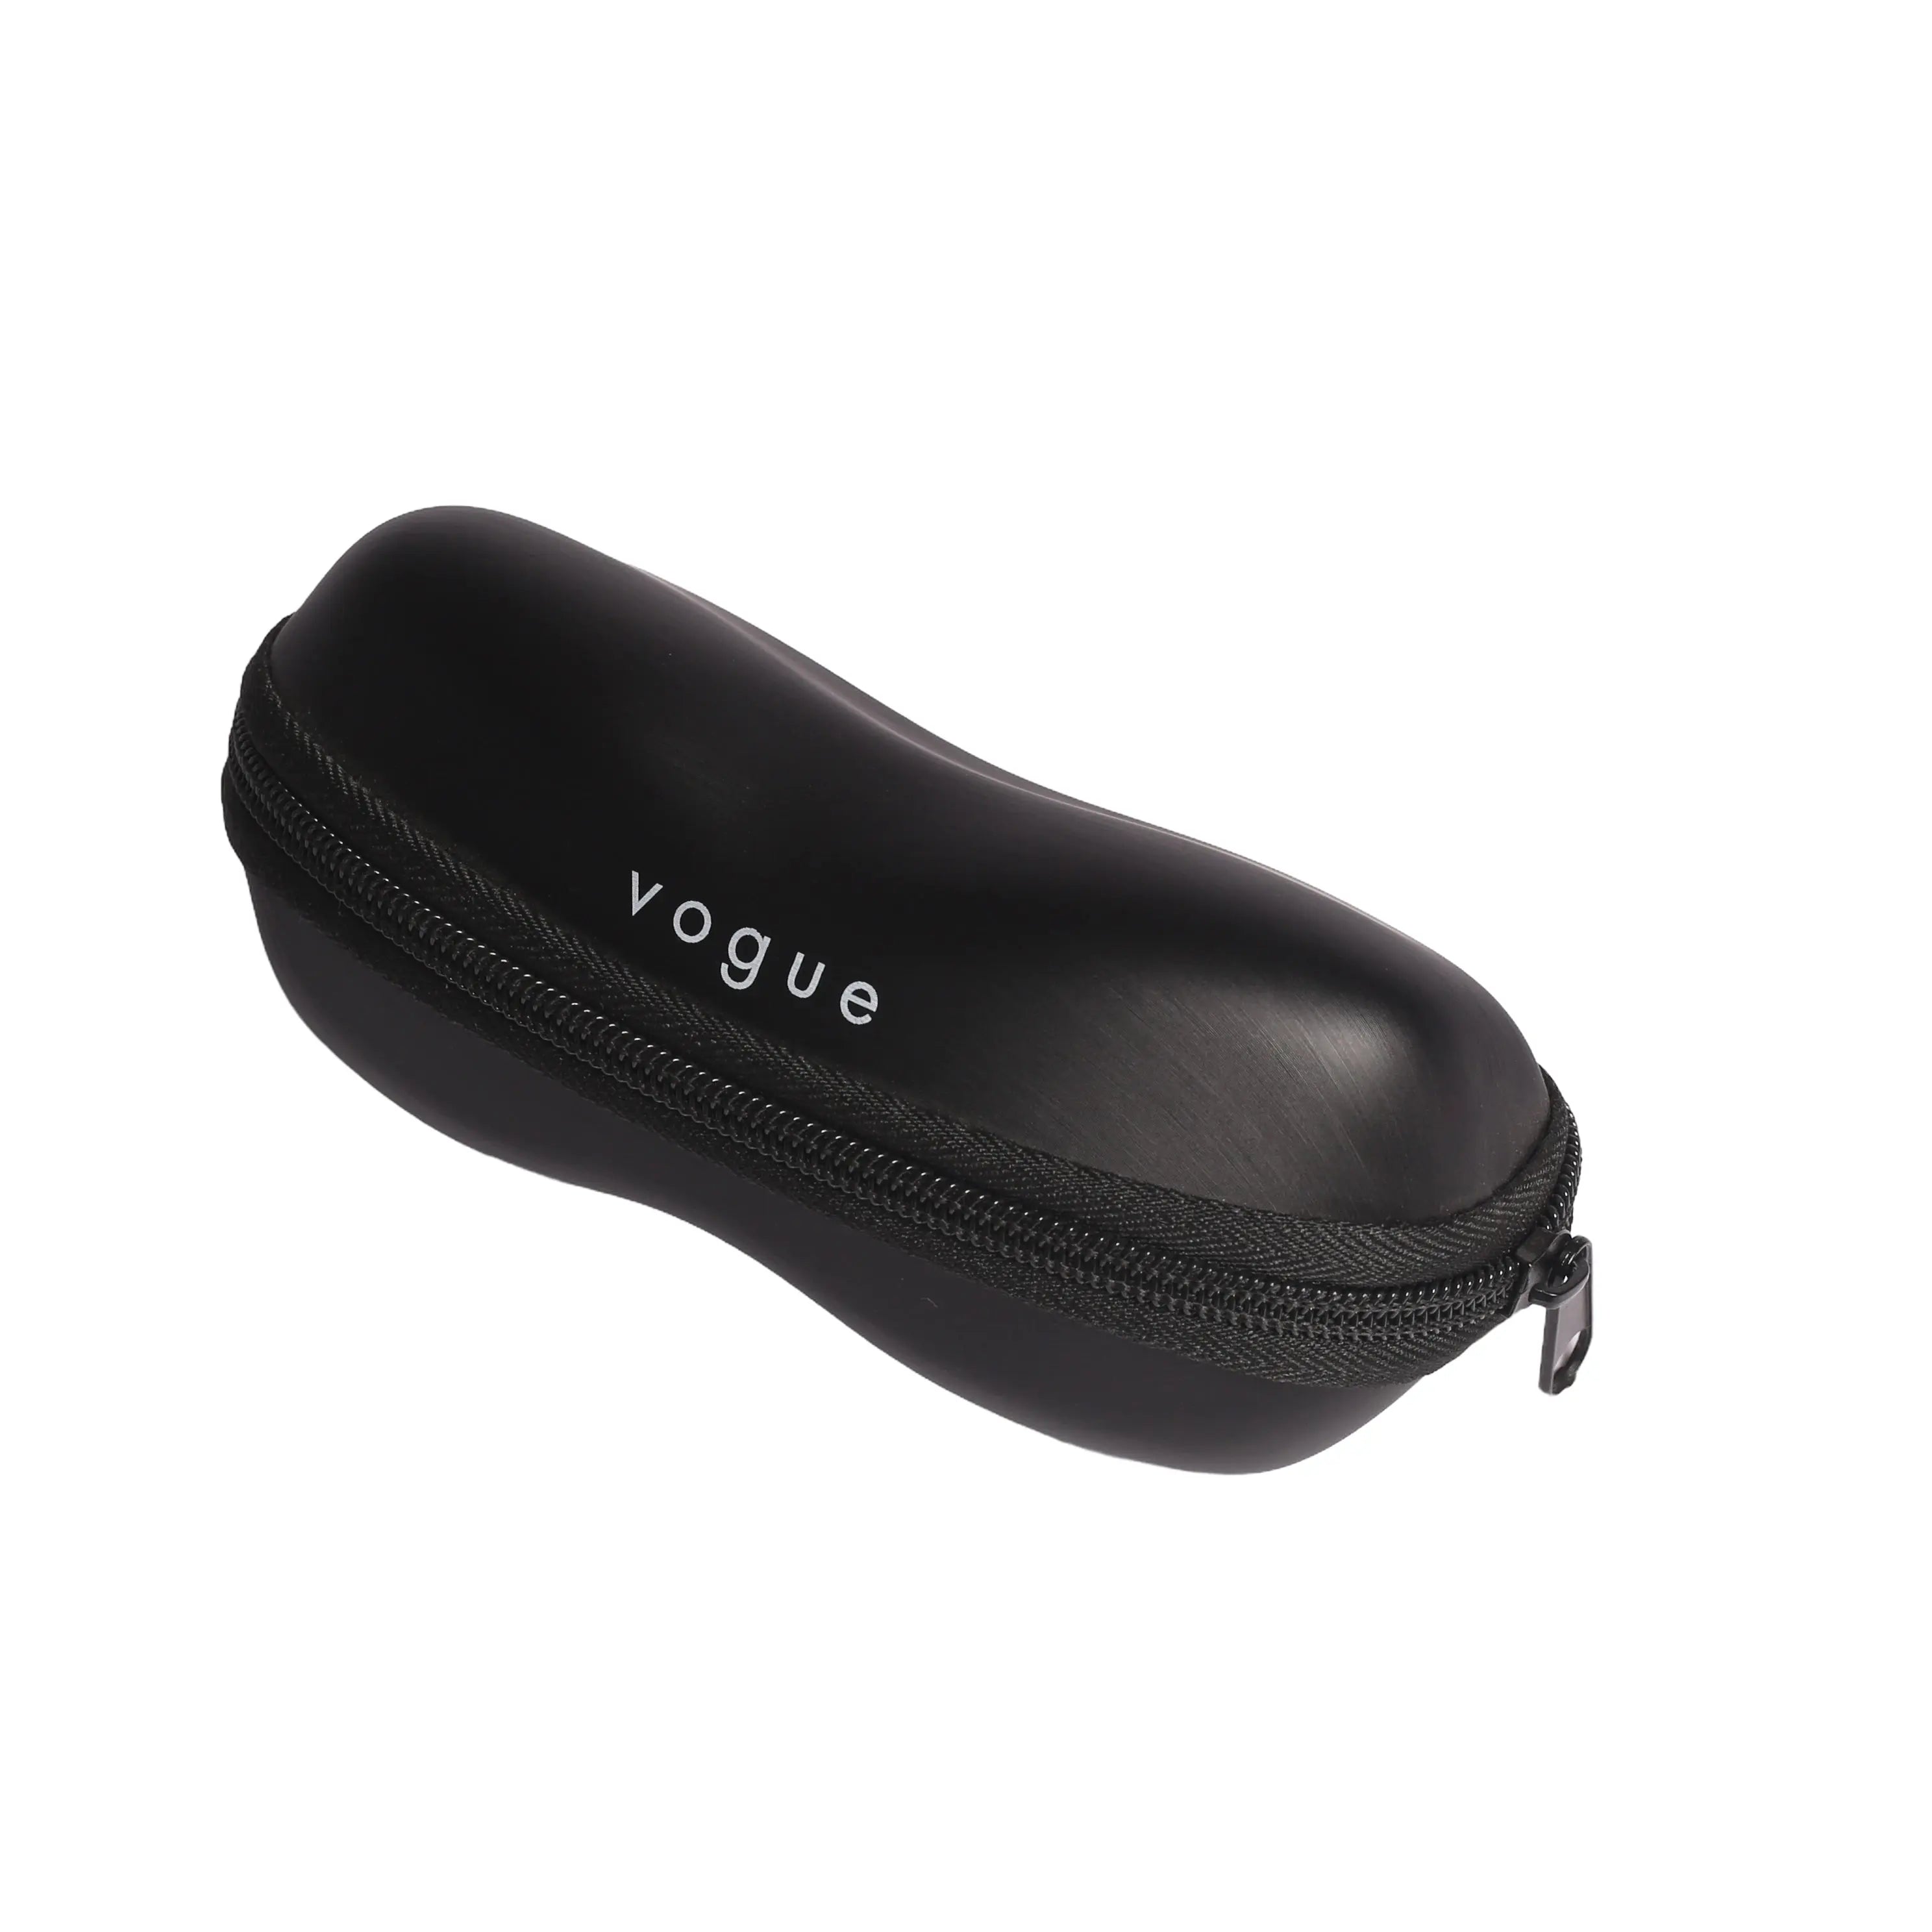 Vogue-VO5496S-54-W44/11 Sunglasses - Premium Sunglasses from Vogue - Just Rs. 2990! Shop now at Laxmi Opticians